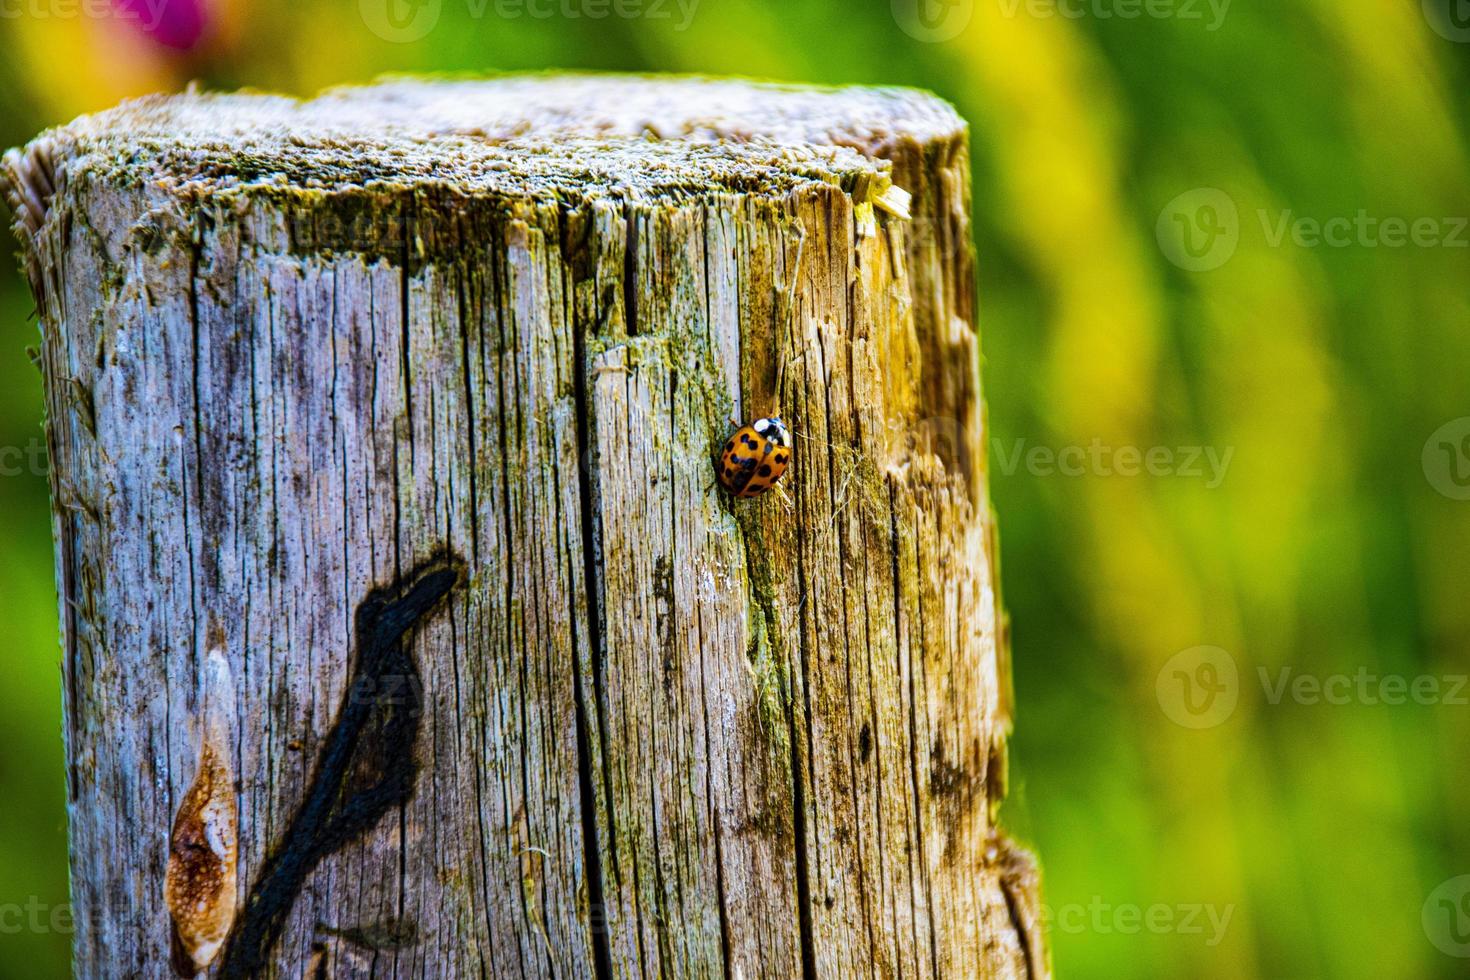 Ladybug on wood photo